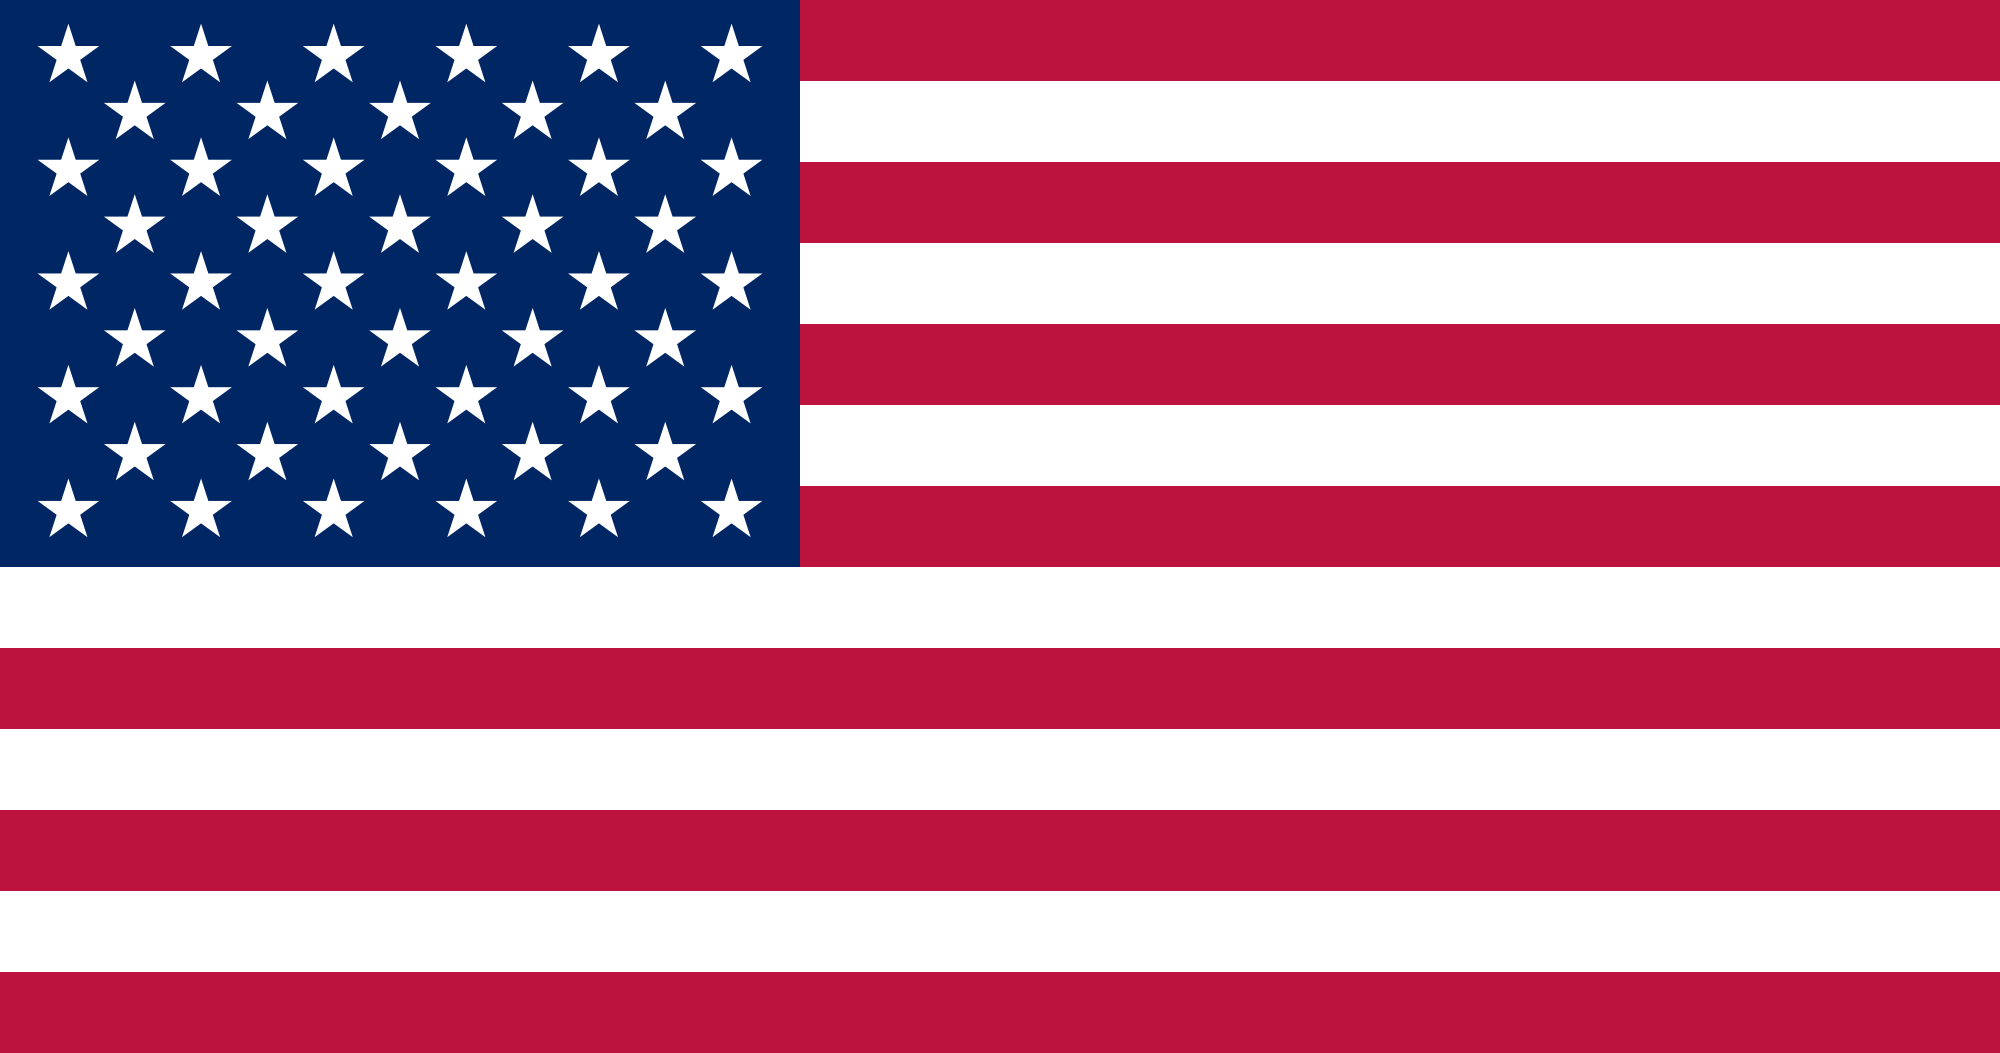 United States ($) (₹)